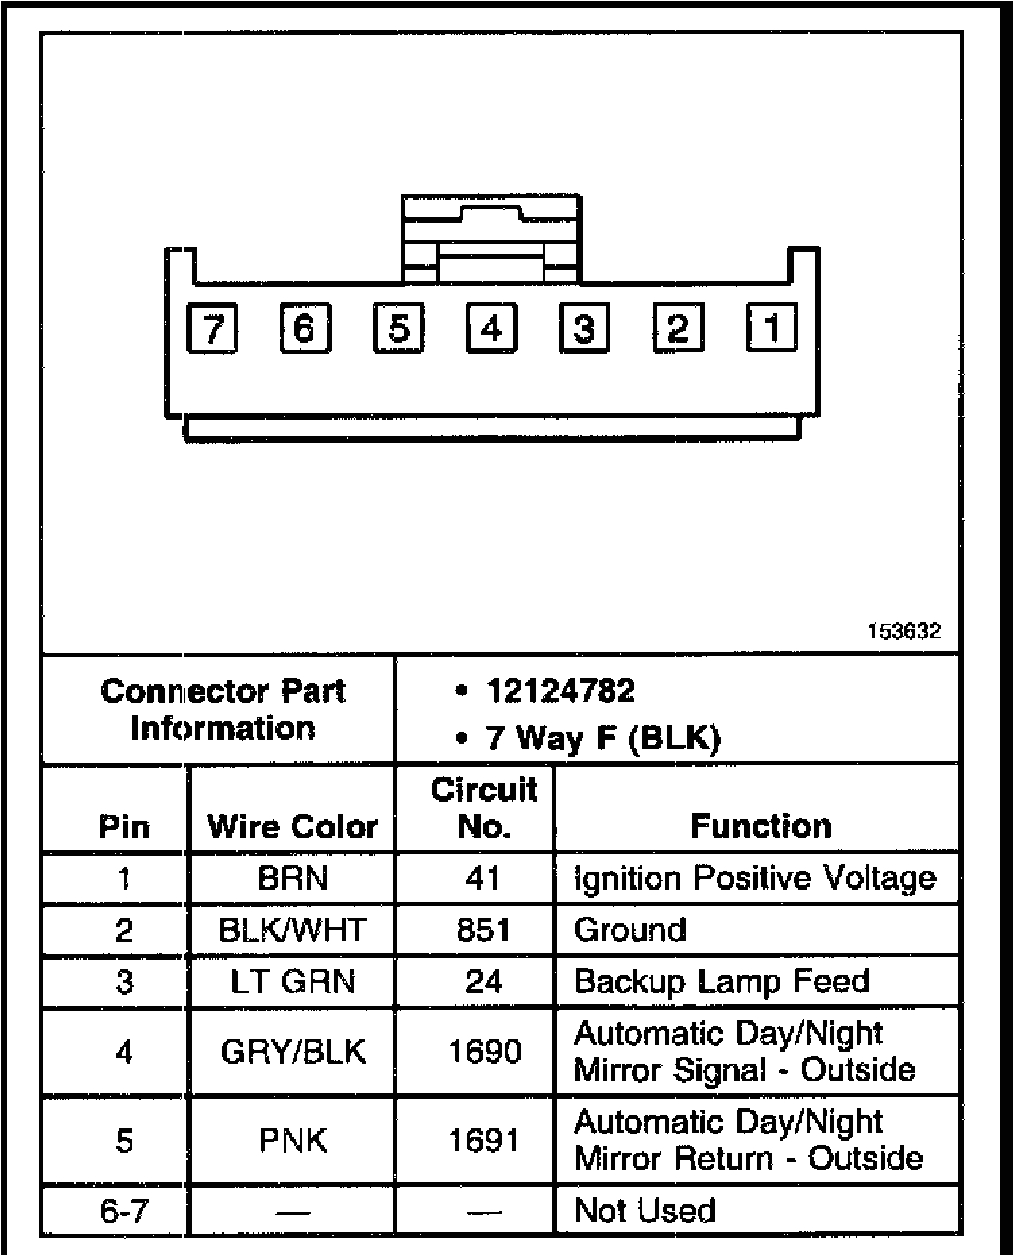 gentex 10 pin wiring diagram mirror basic electronics wiring diagram sony backup camera circuit diagram gentex